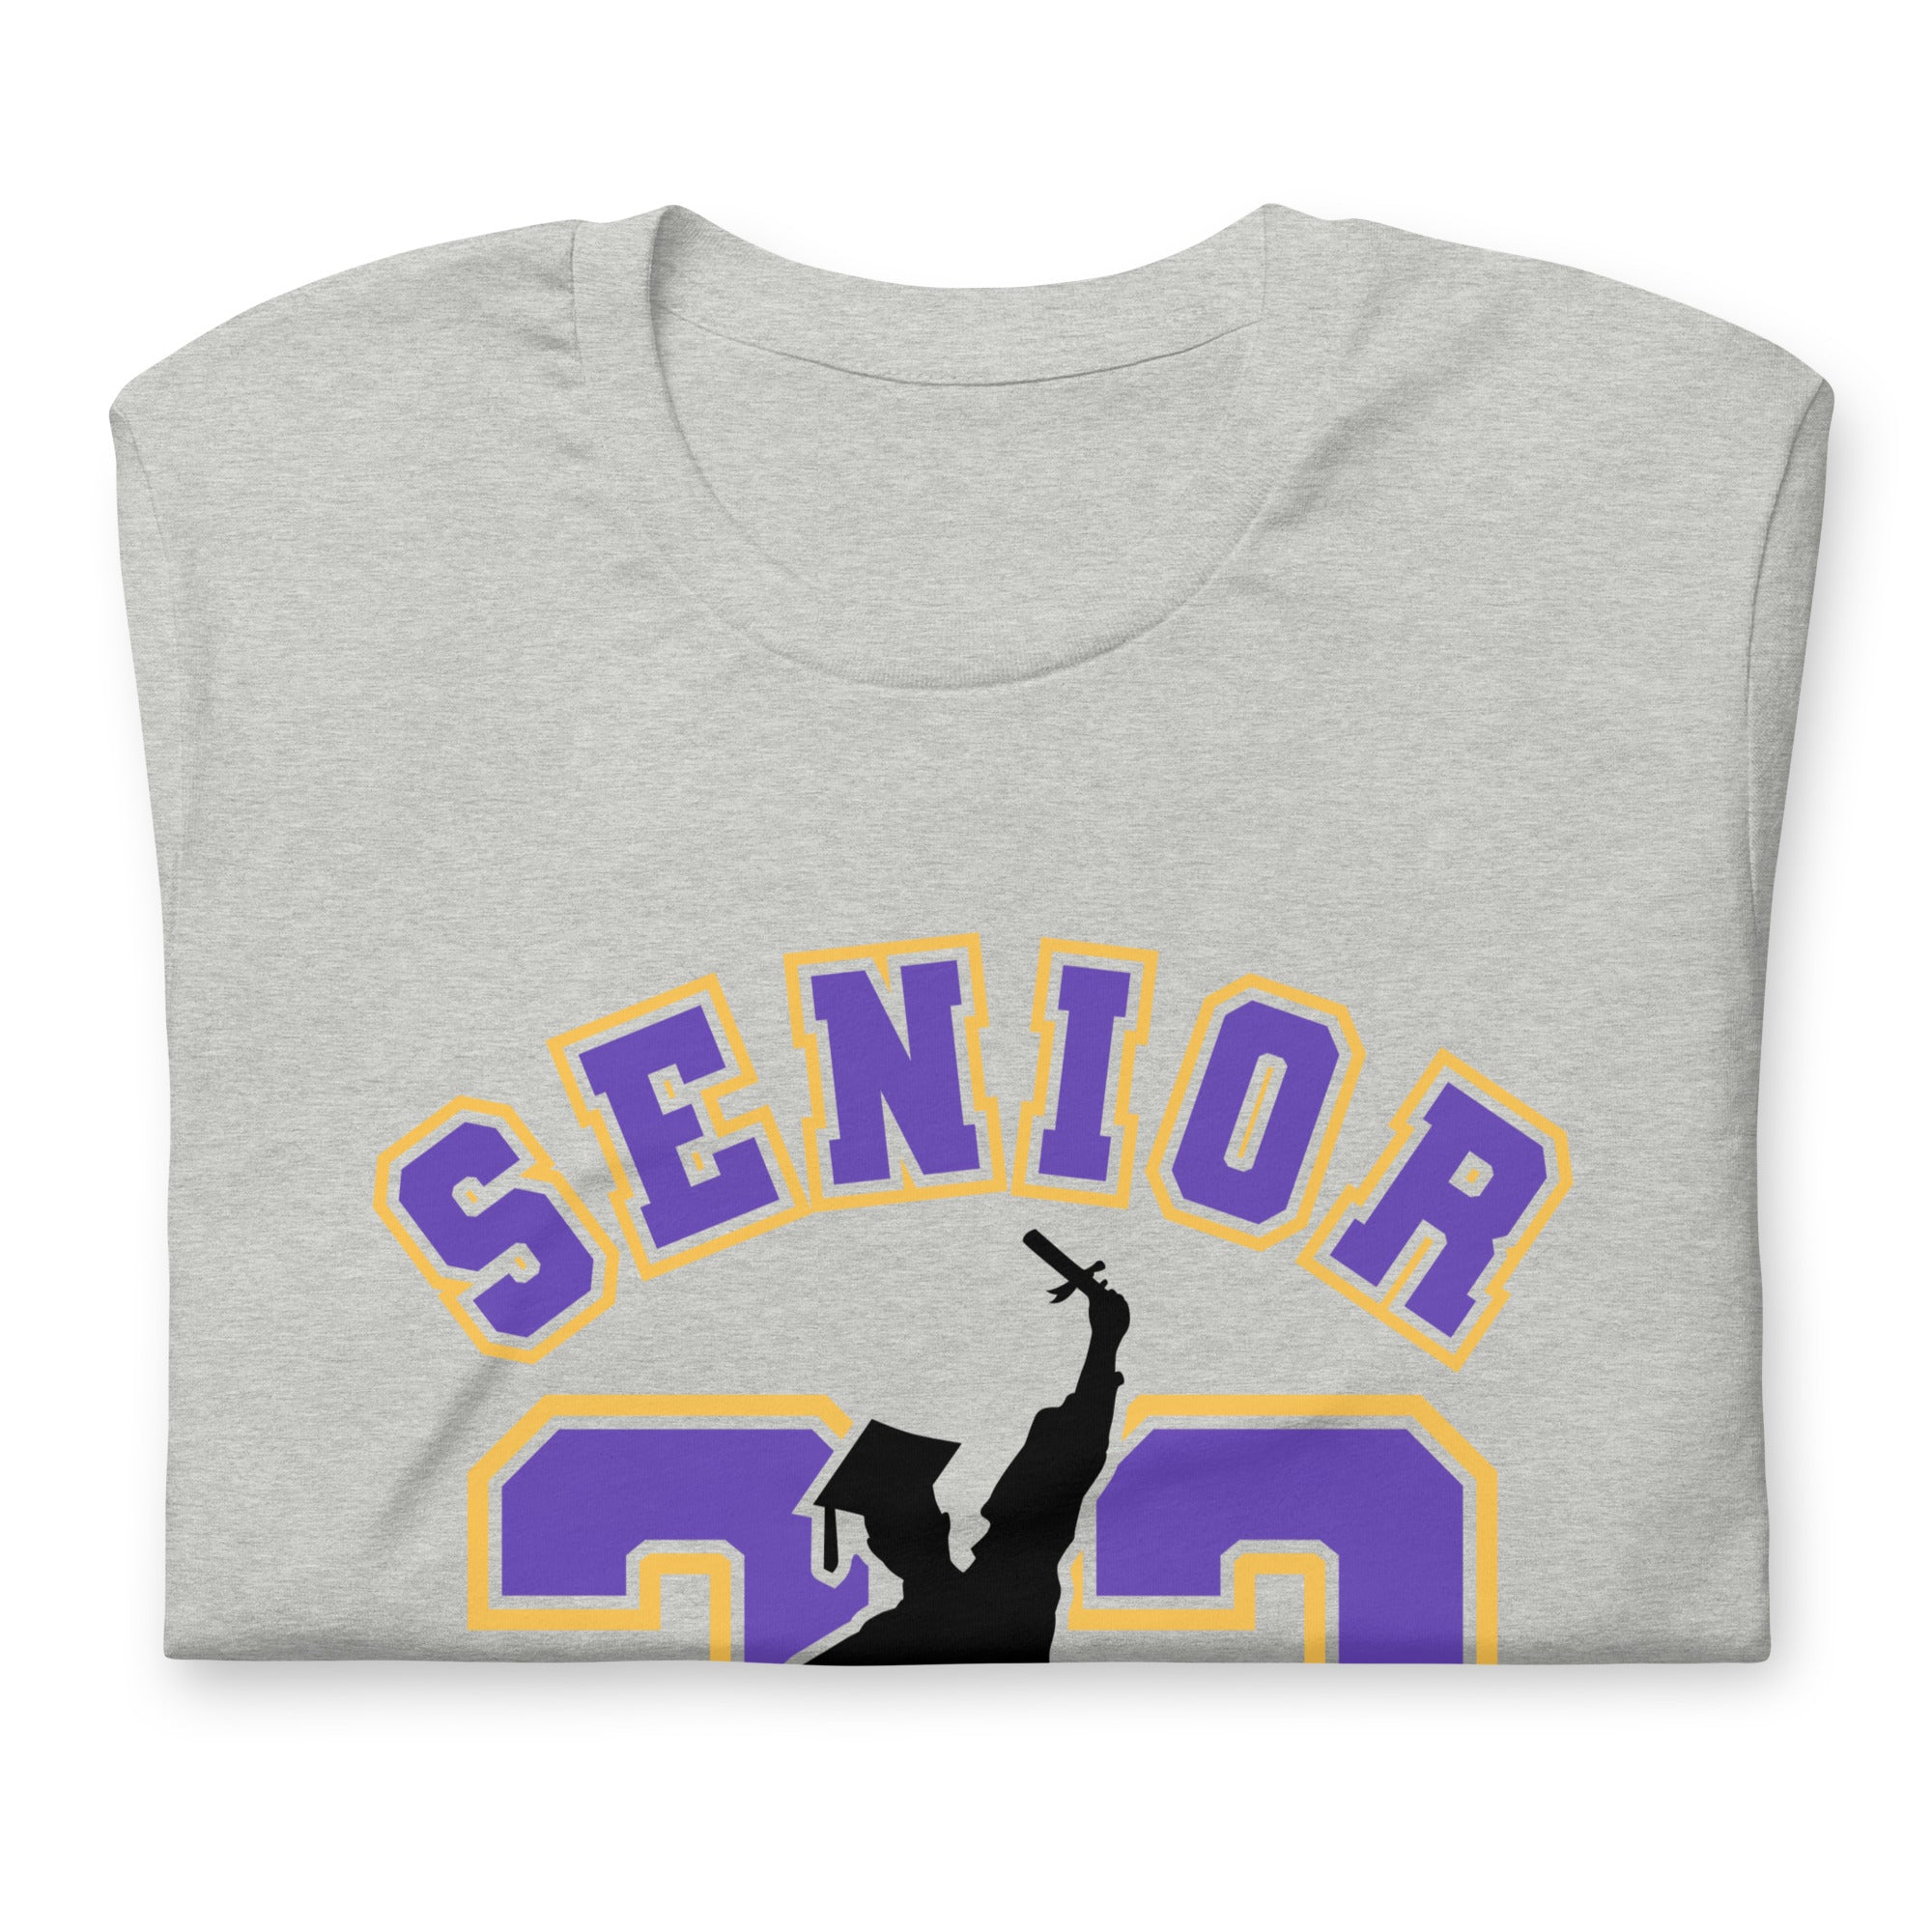 Senior 23 Unisex t-shirt (gold/purple)